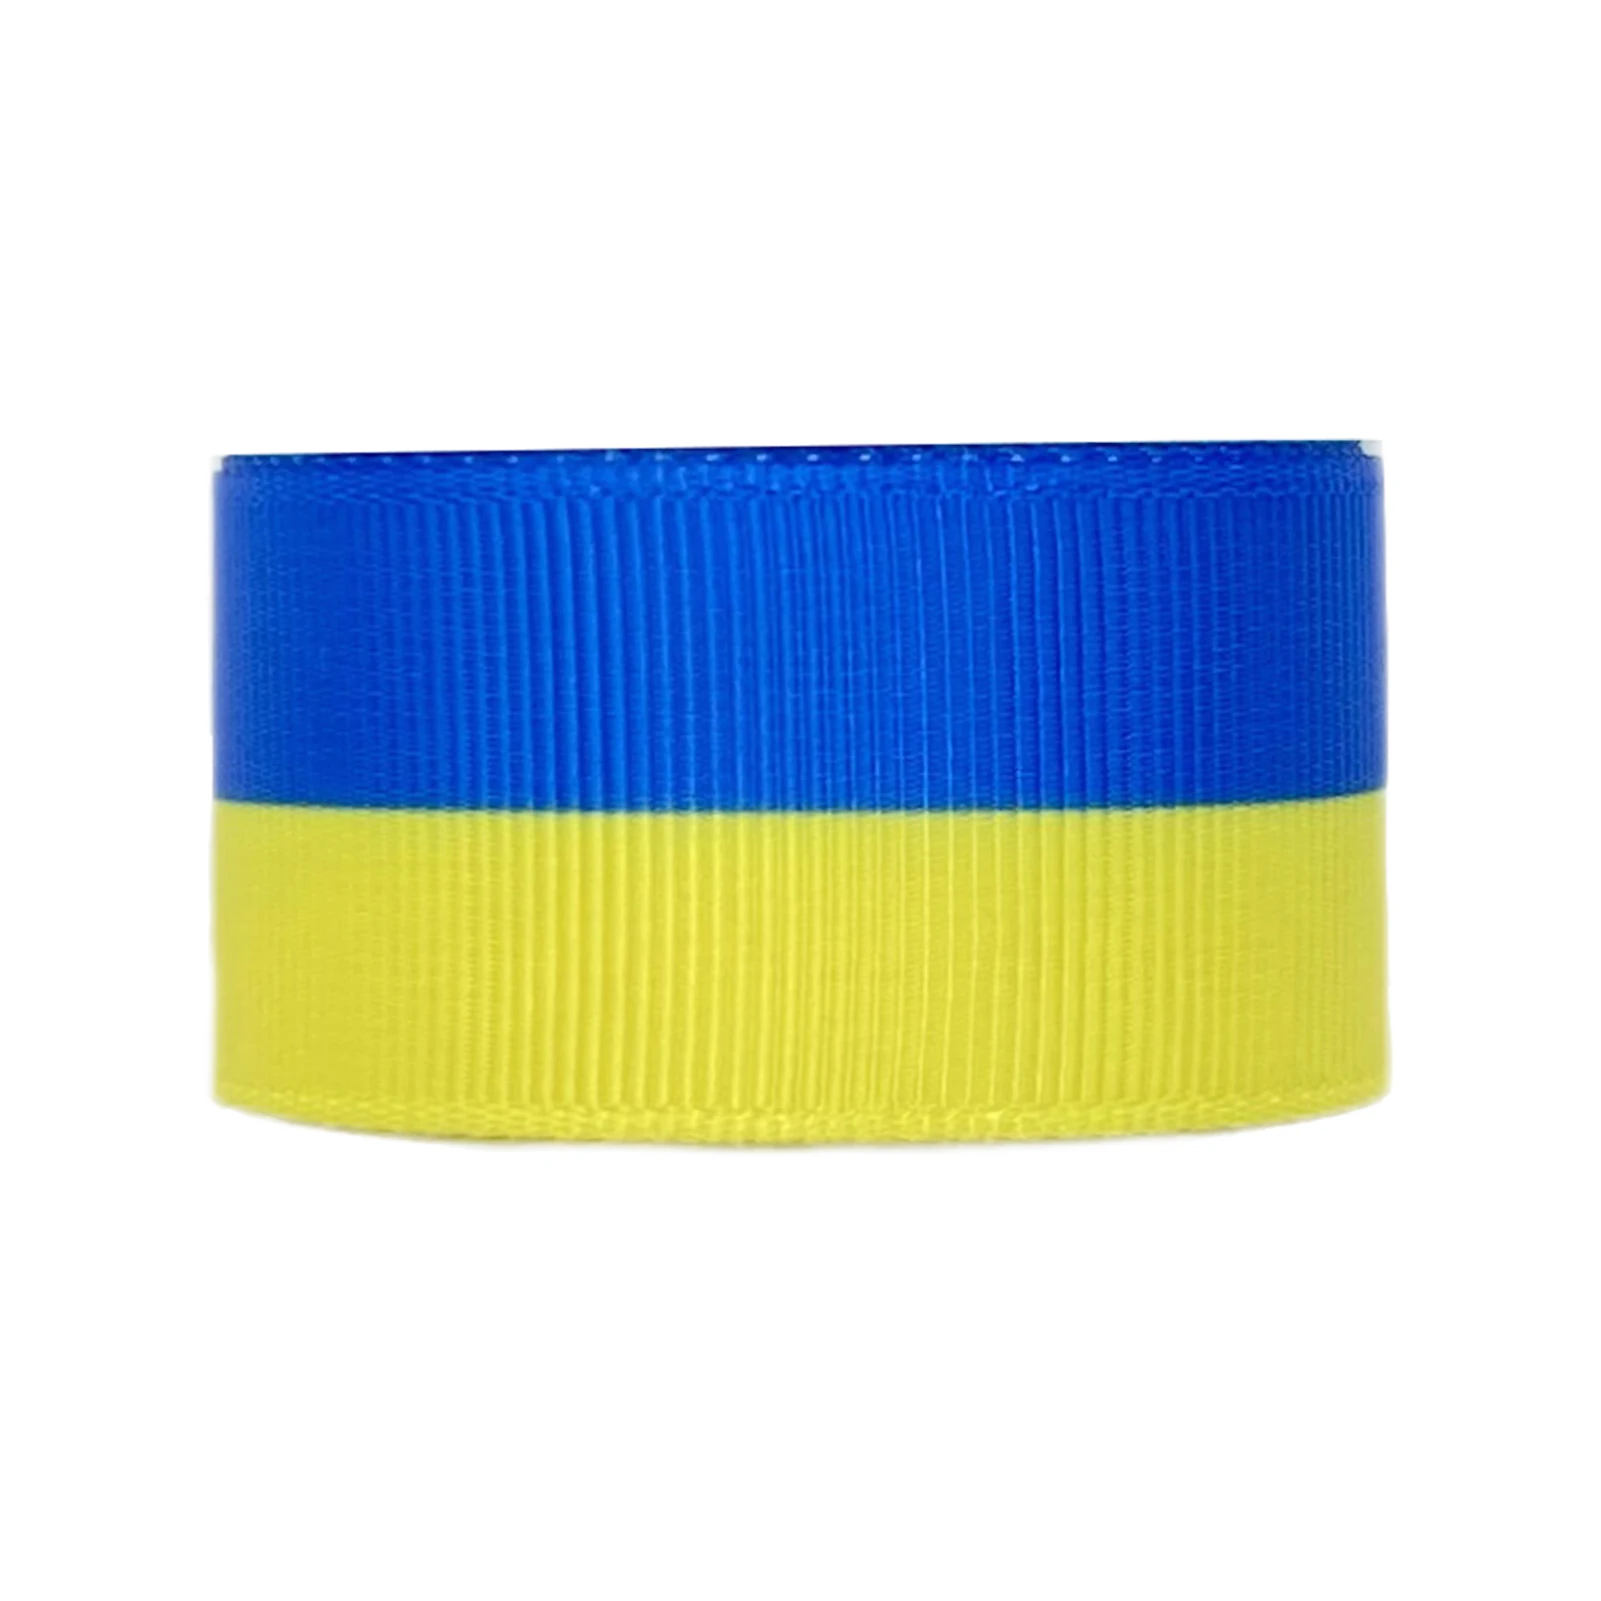 Ukraine Flag Ribbon Blue And Yellow Ribbon Blue Yellow Ribbon Rolls 6 Yard / Roll Grosgrain Print Ribbon Perfect For Crafts Hair